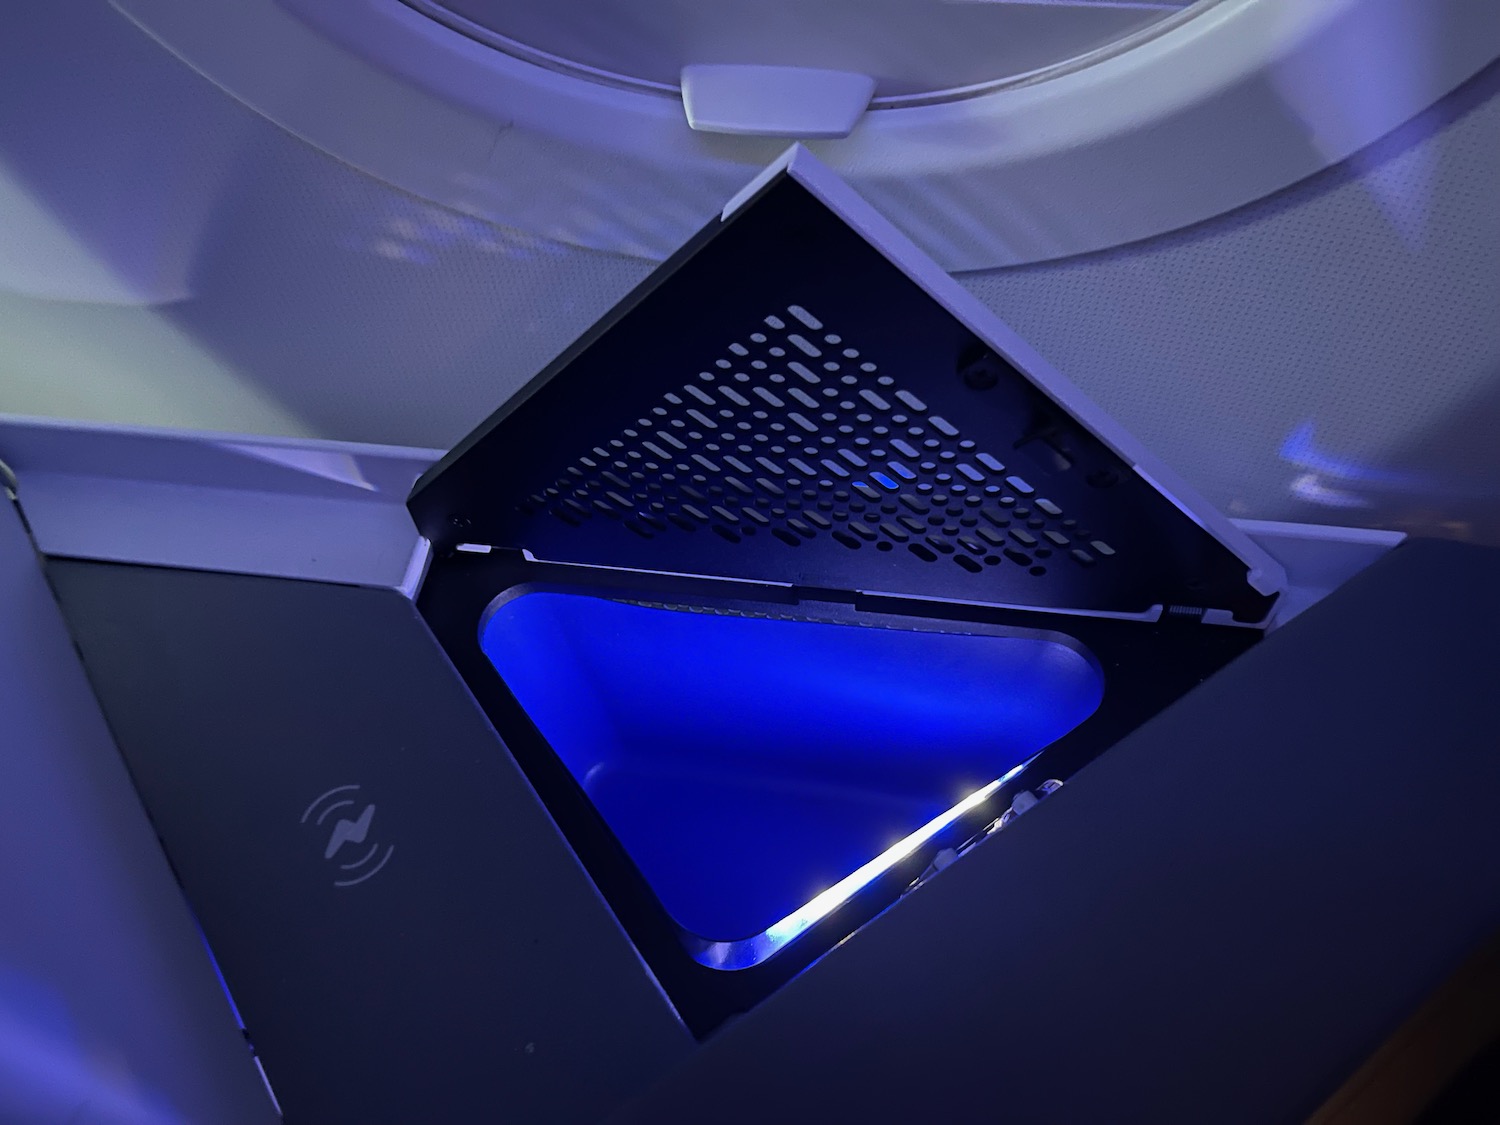 a blue light inside a machine